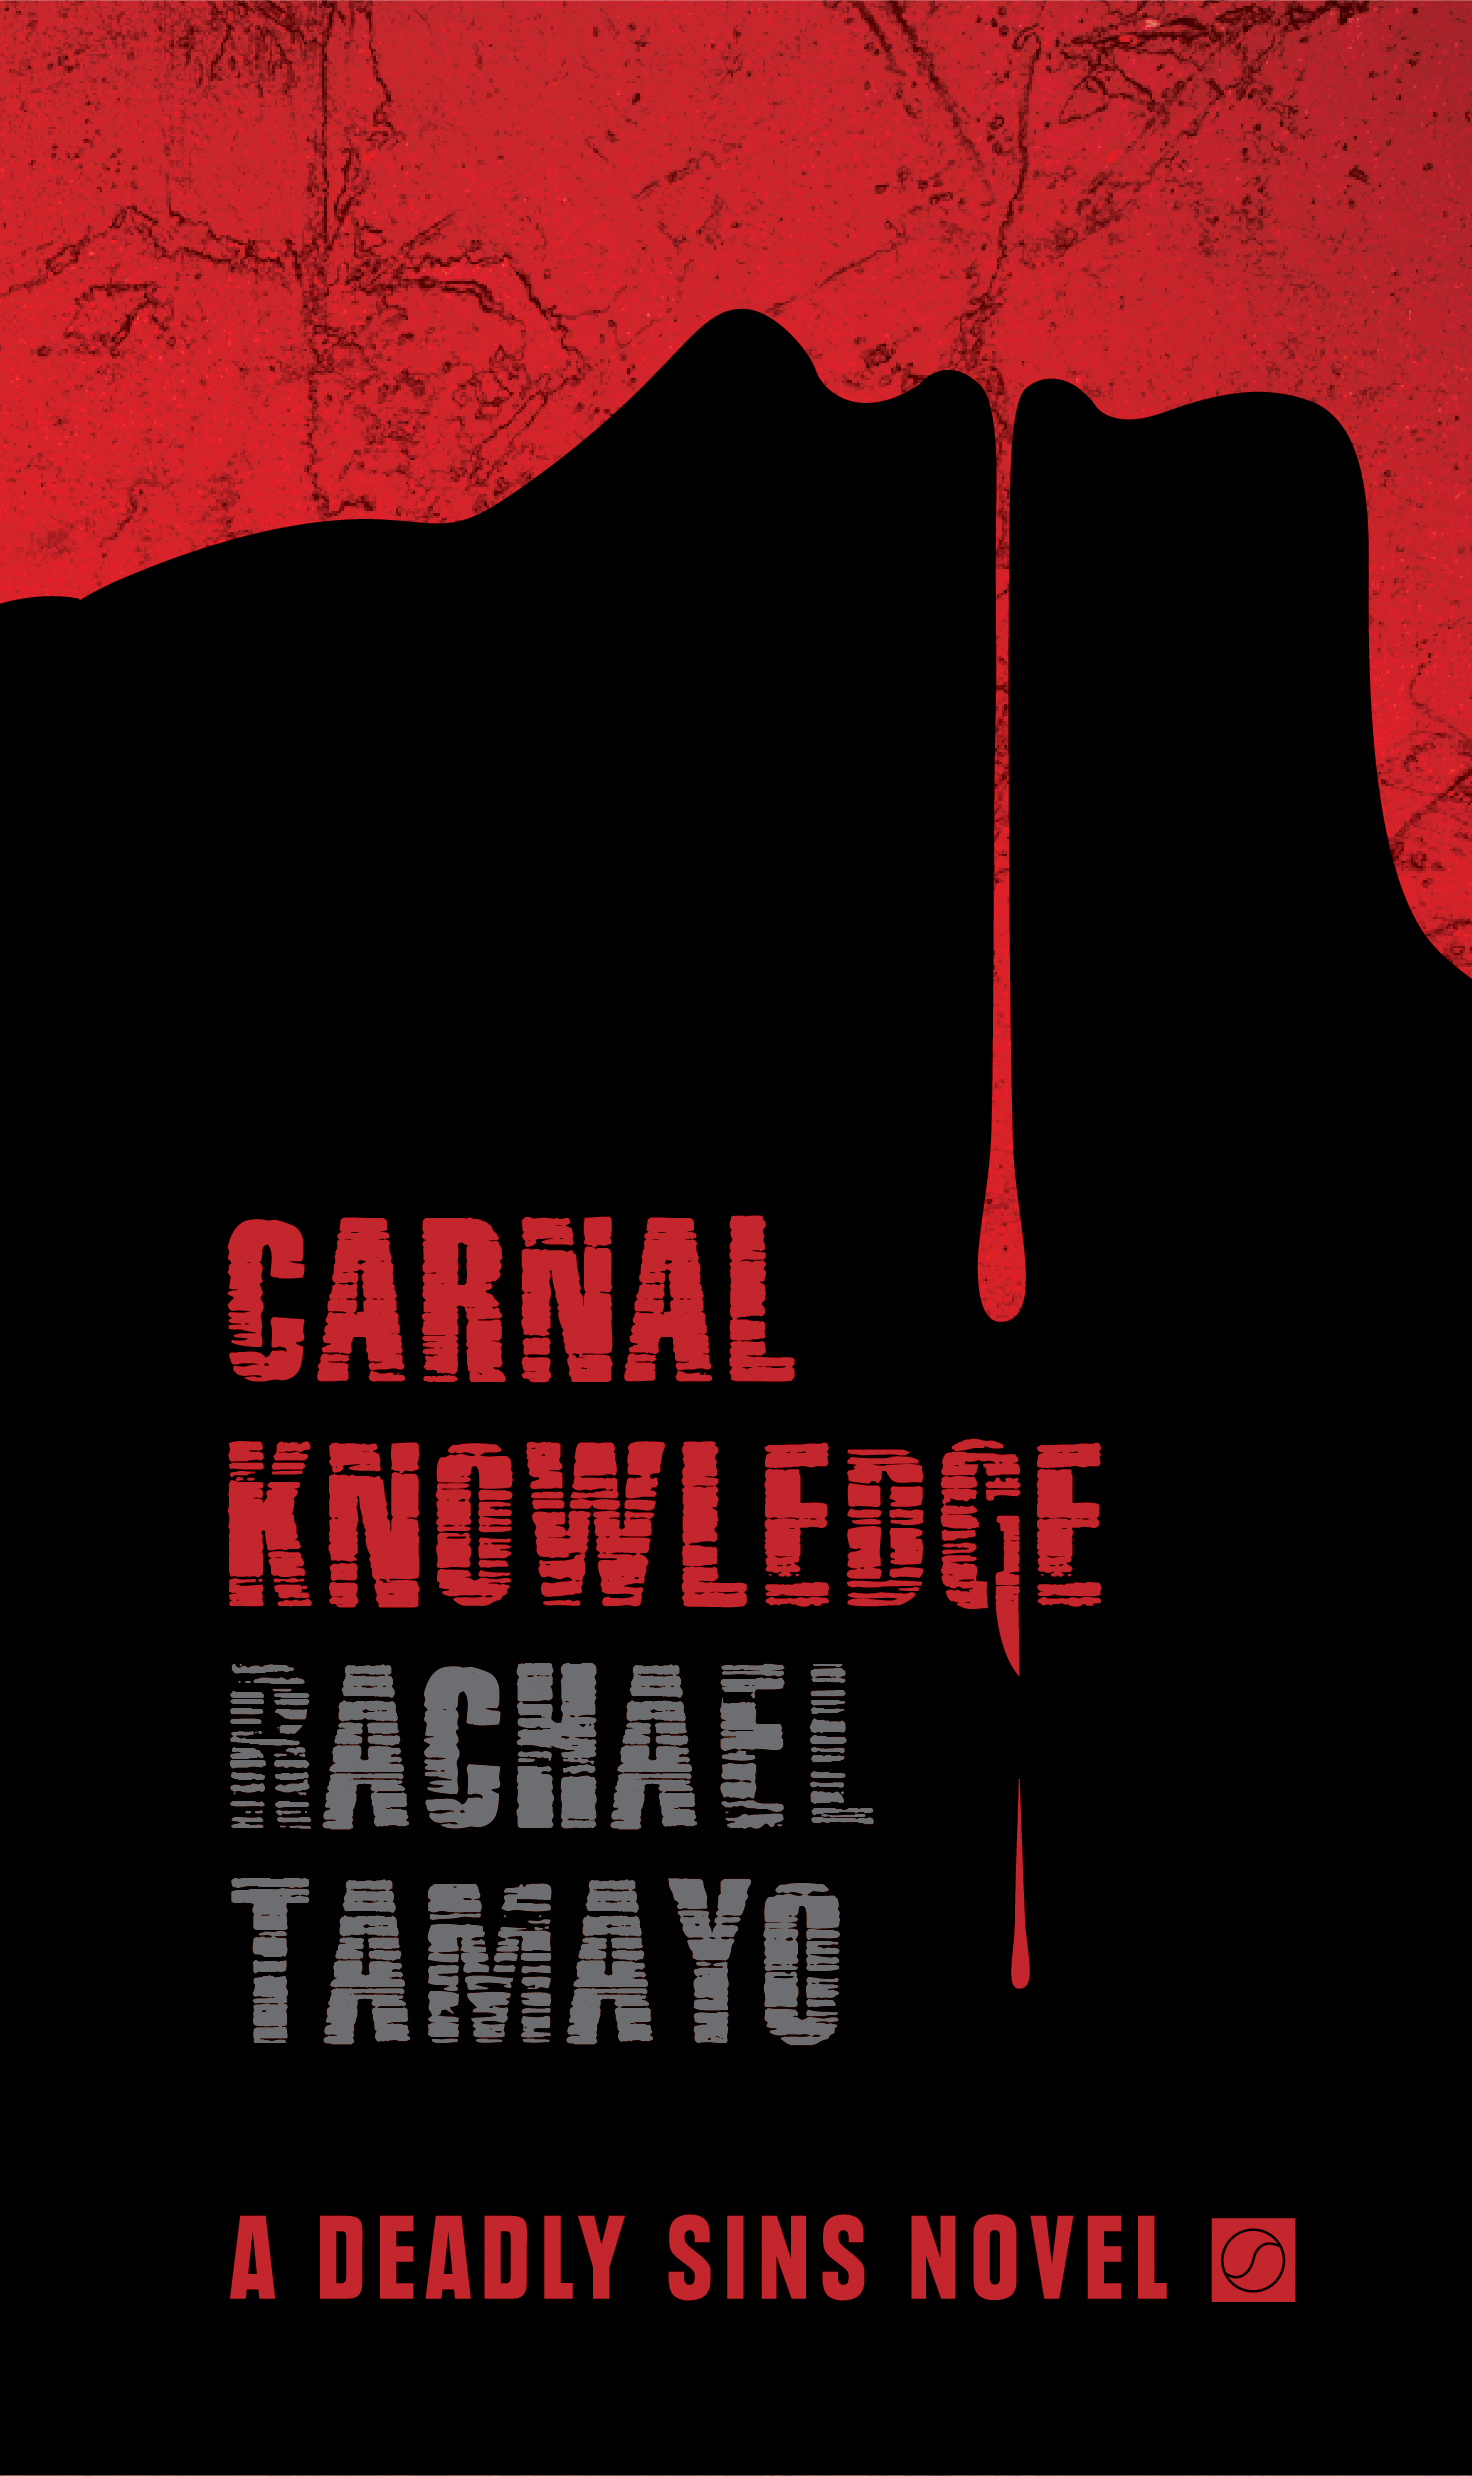 Carnal Knowledge by Rachael Tamayo